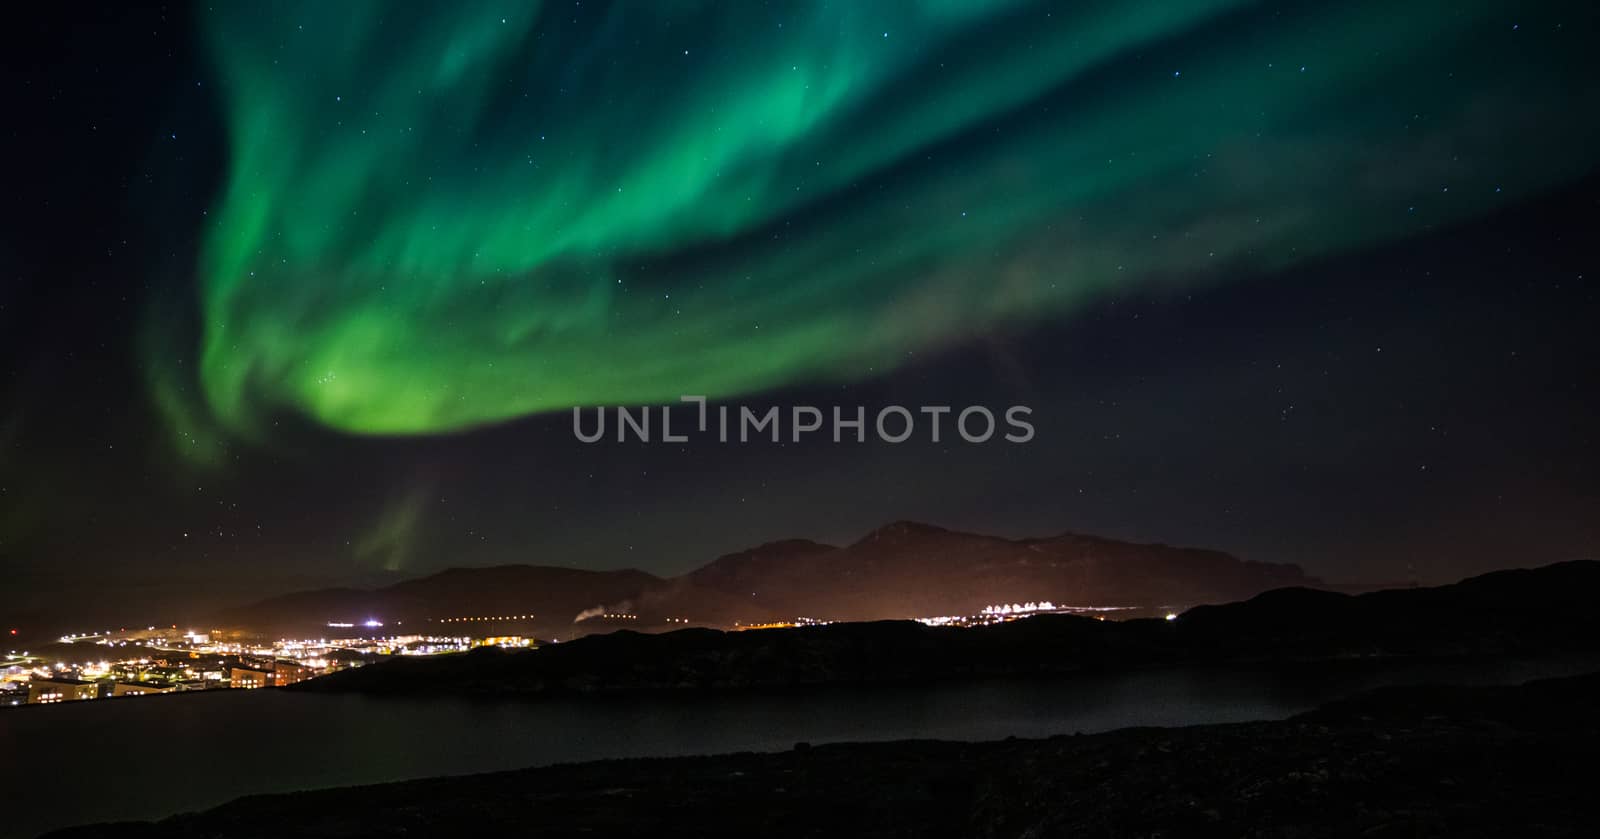 Massive green Northern lights shining over Nuuk city, Greenland